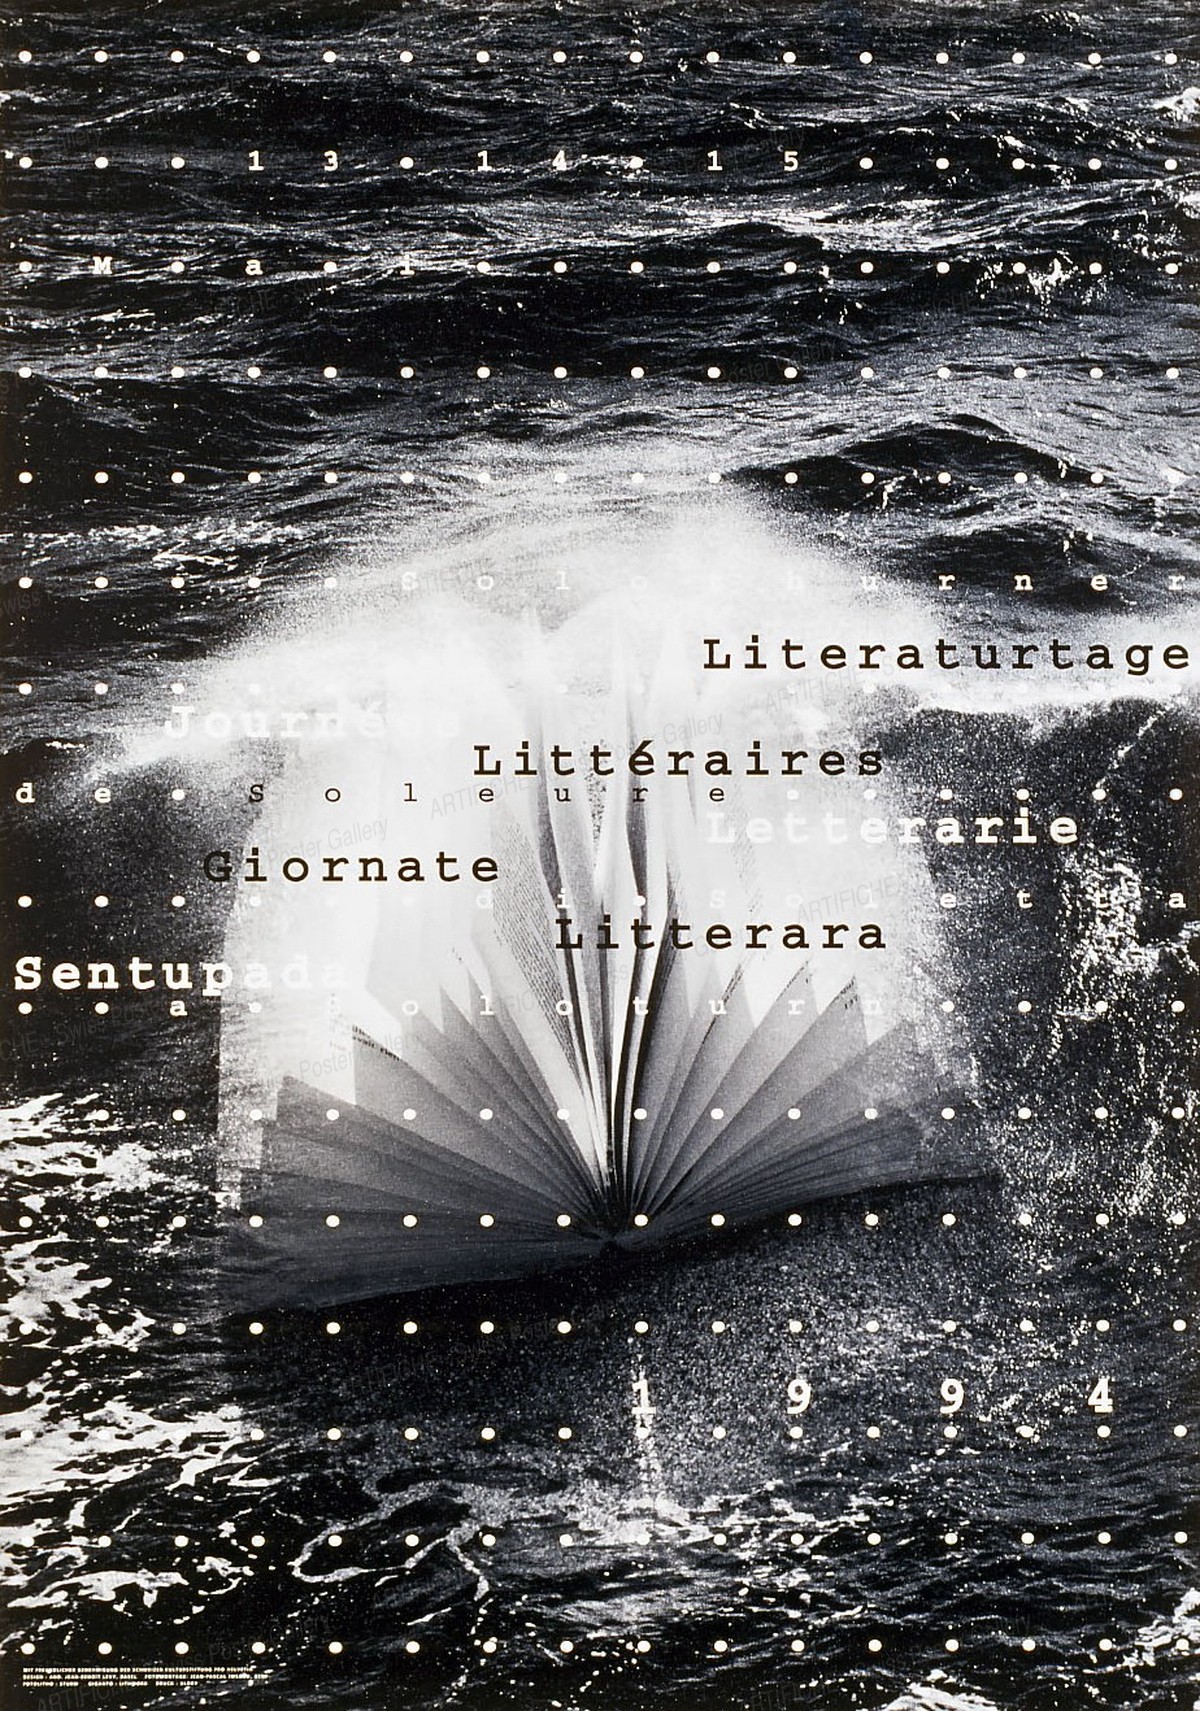 Solothurner Literaturtage – Journées littéraires de Soleure – Giornate Litterare di Soletta, Levy, Jean-Benoît, Photo: J.P. Imsand